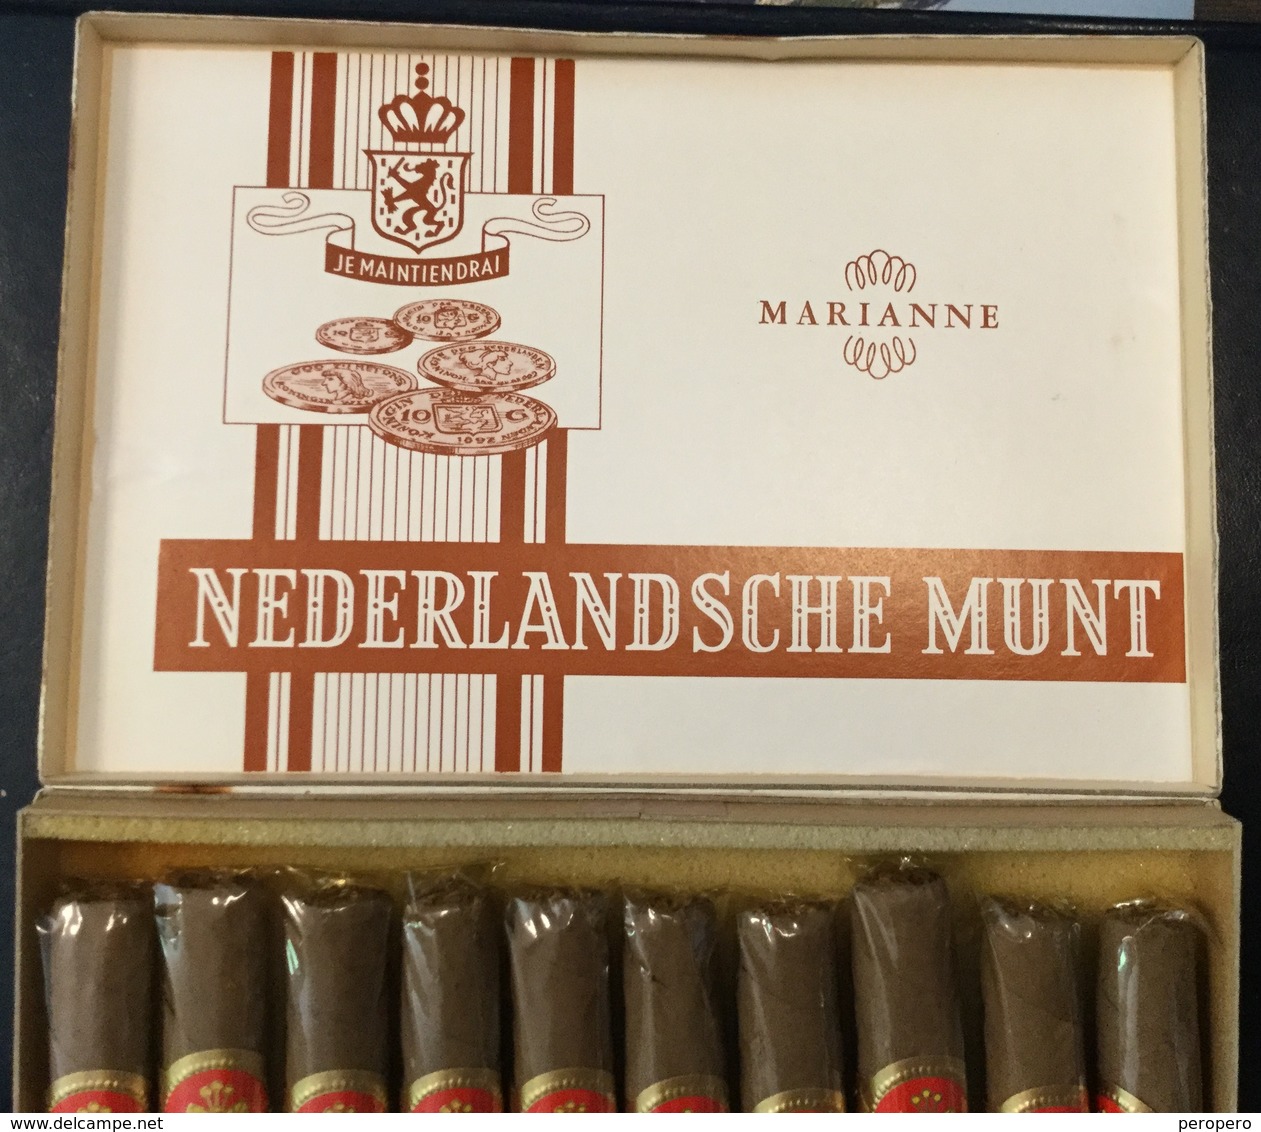 FULL    TOBACCO  BOX    CIGARS   MARIANNE  NEDERLANDSCHE MUNT - Empty Tobacco Boxes